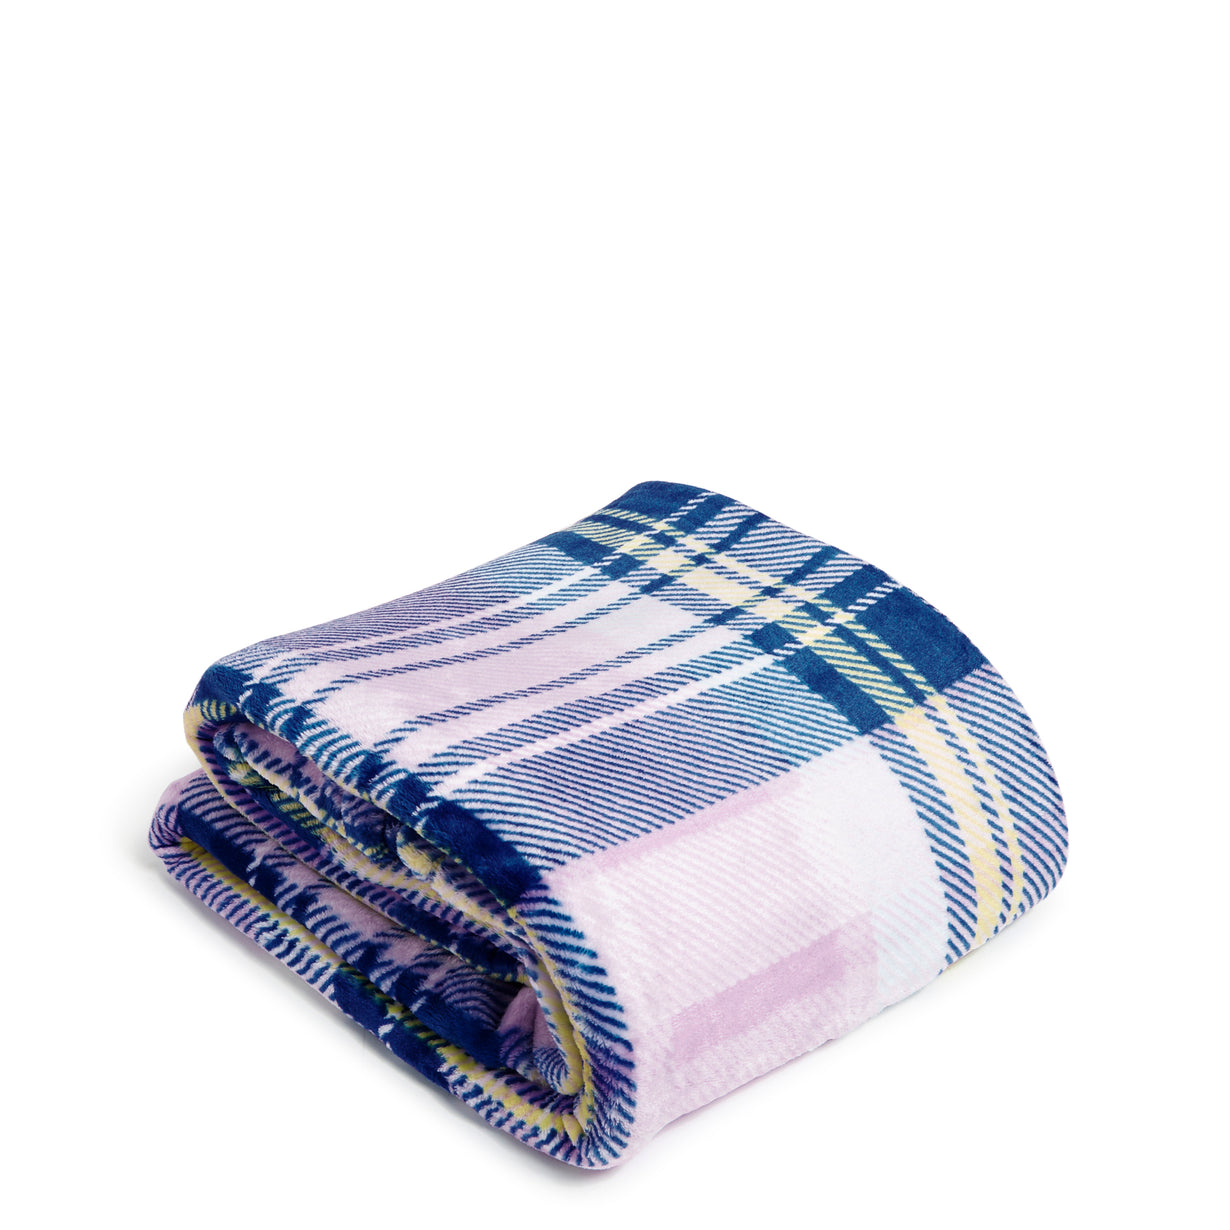 A Vera Bradley Plush Throw Blanket In Amethyst Plaid Pattern, folded up neatly.